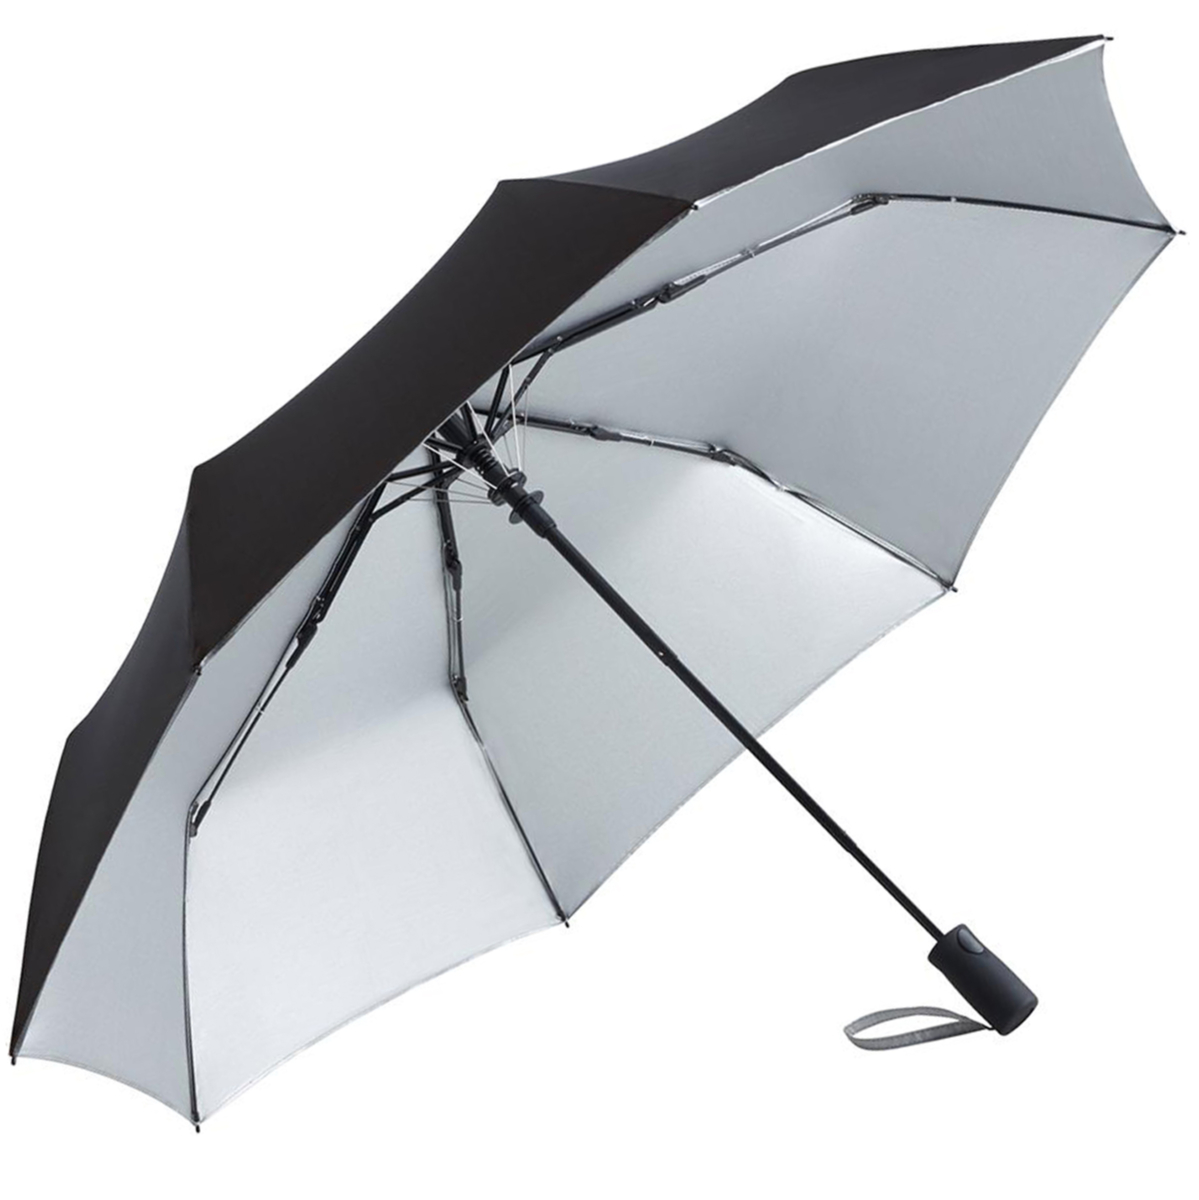 UV Protective SPF50+ Two-Tone Automatic Opening Folding Umbrella - Black & Silver